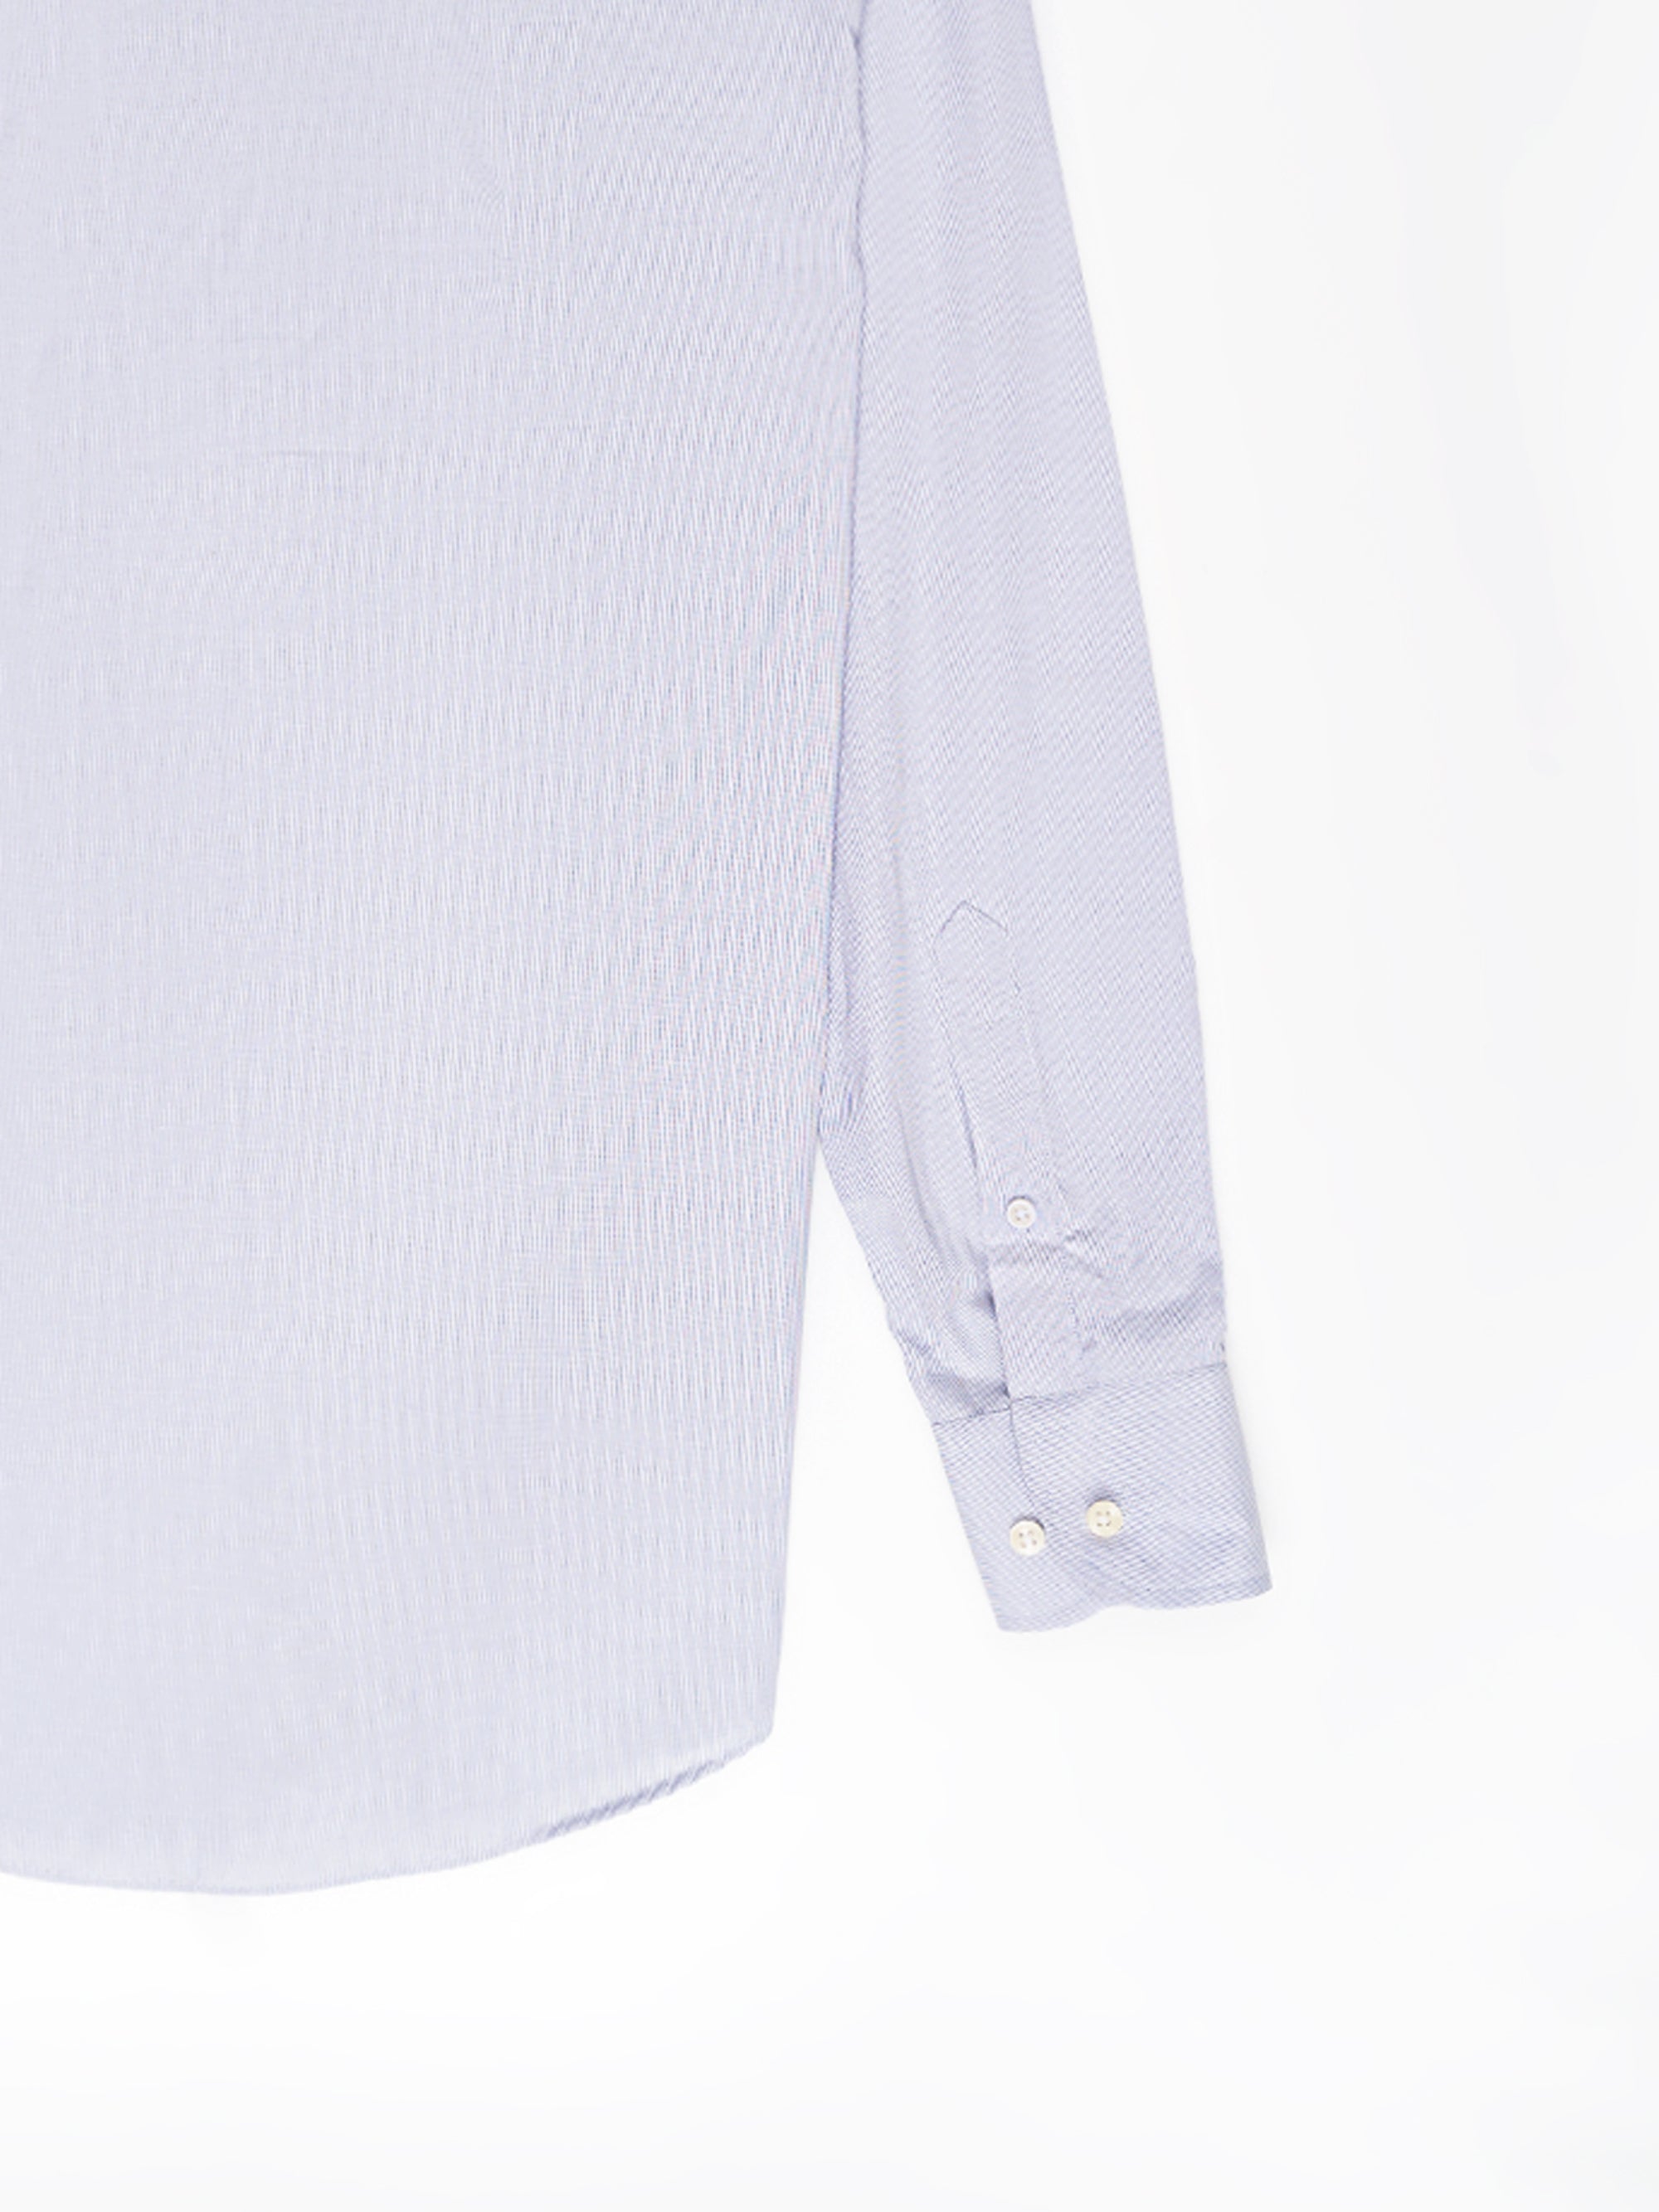 DRESS SHIRT PURPLE / WHITE